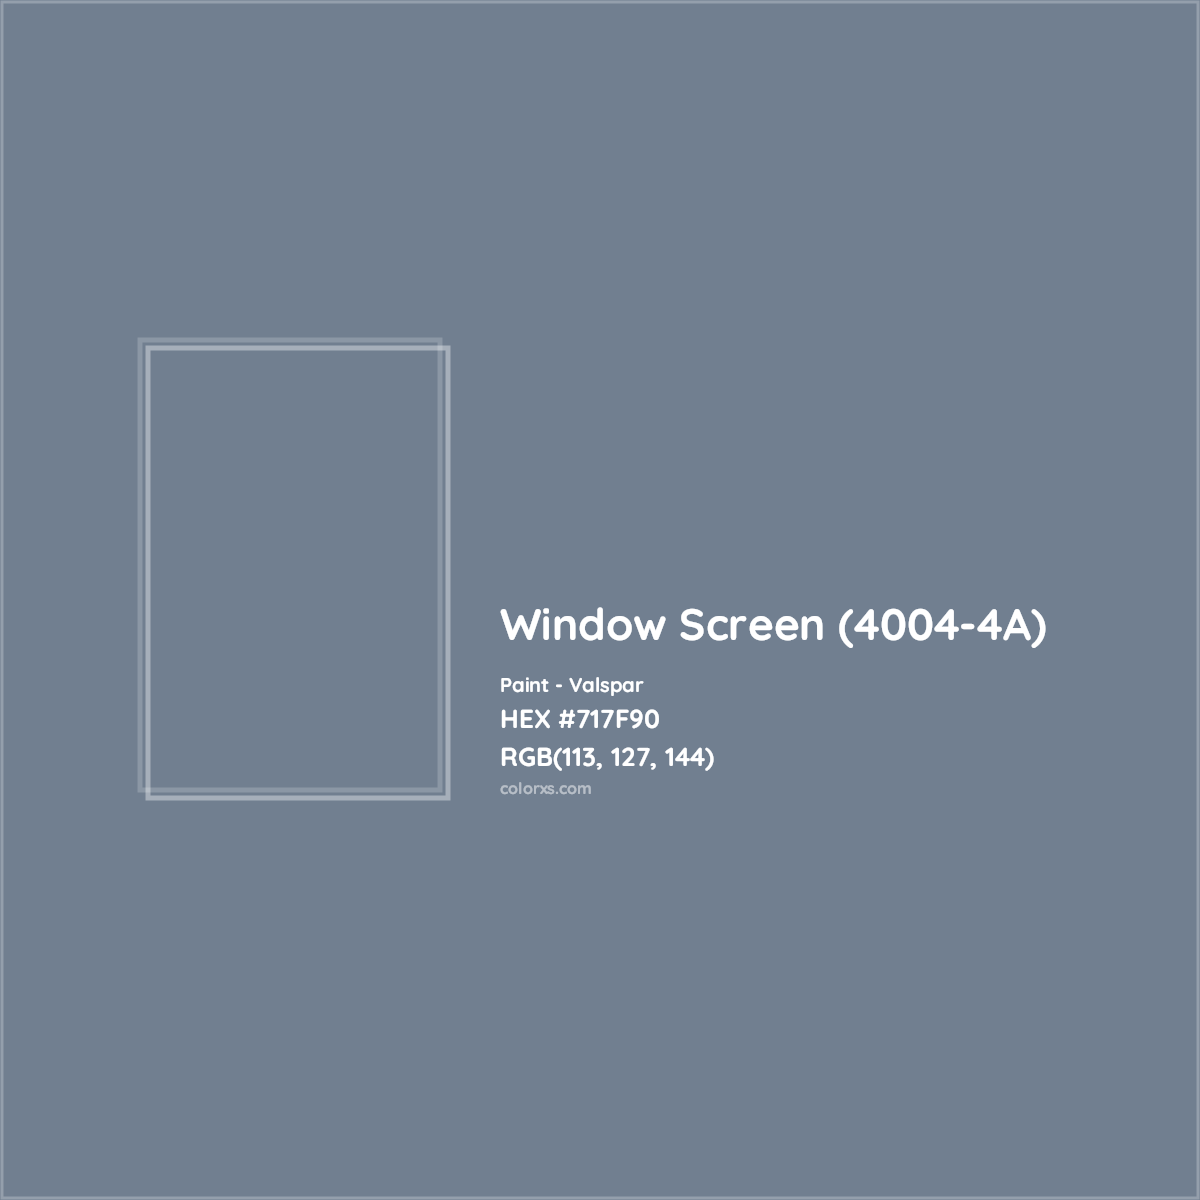 HEX #717F90 Window Screen (4004-4A) Paint Valspar - Color Code